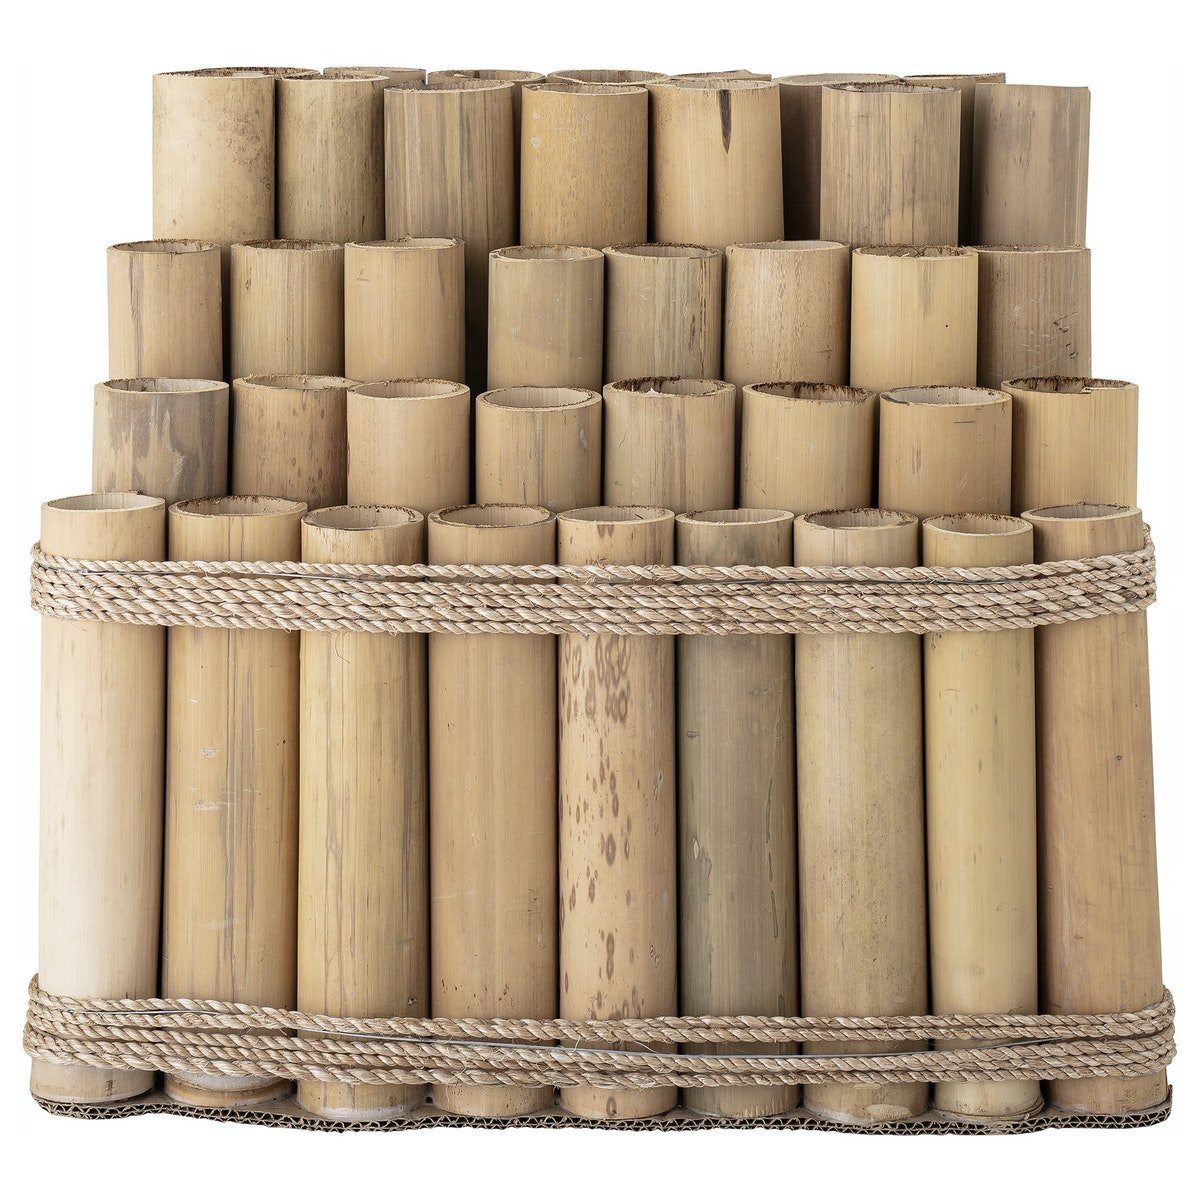 Billede af Koko, Deko, Bambus by Bloomingville (H: 44.5 cm. B: 30 cm. L: 44 cm., Natur)